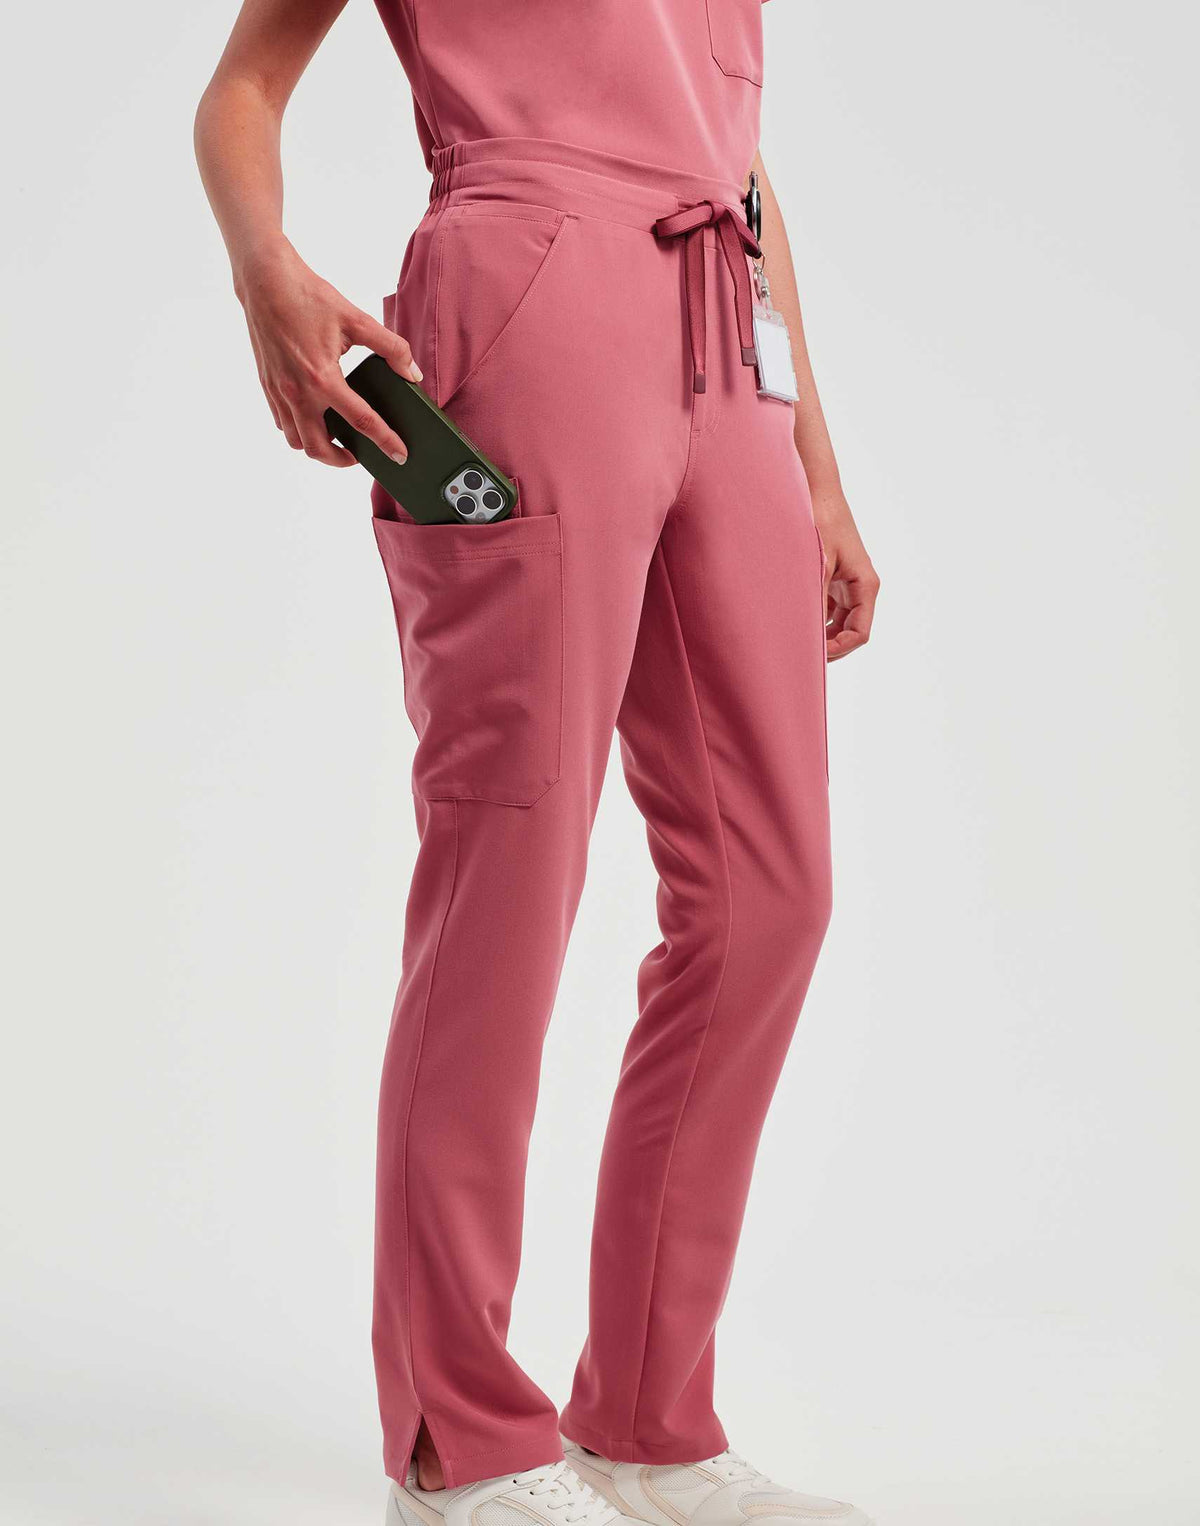 Onna Relentless Women's Healthcare trousers